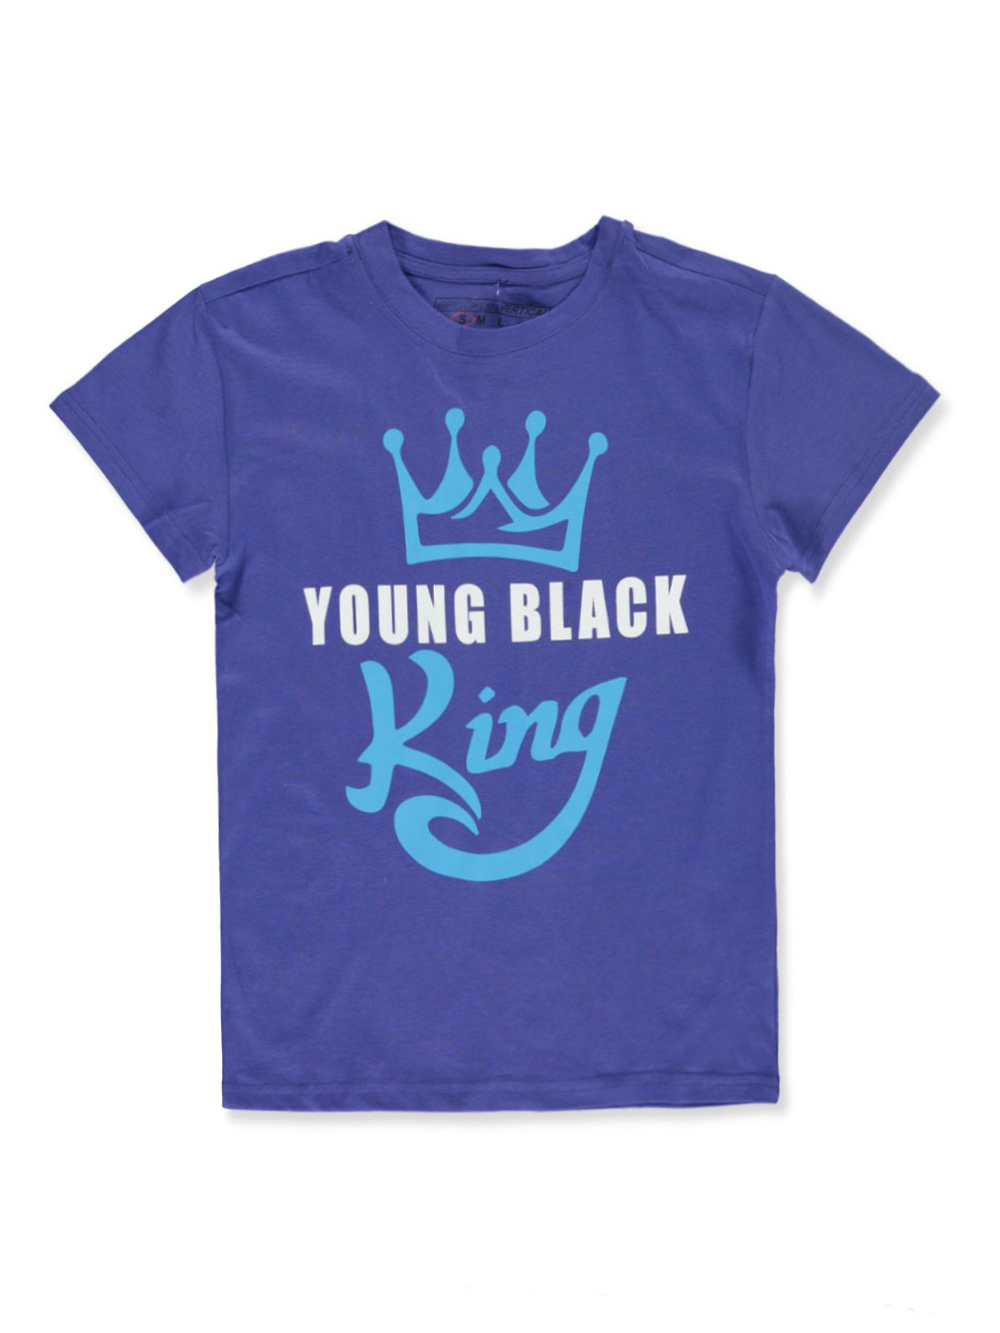 Royal Blue and Black T-Shirts